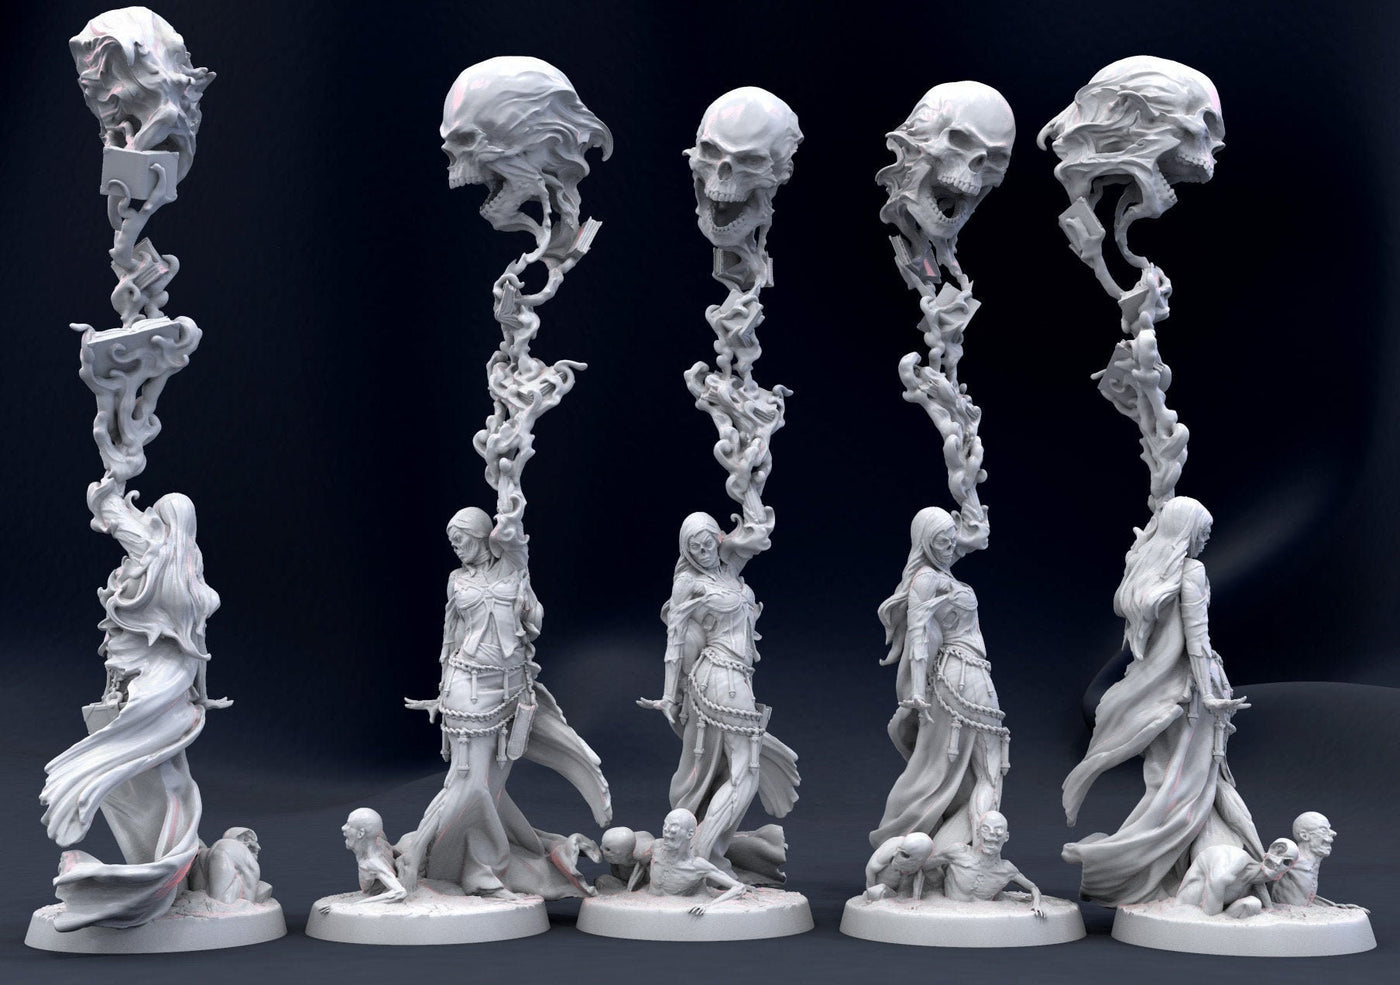 Female Lich King 3D model 3D printable